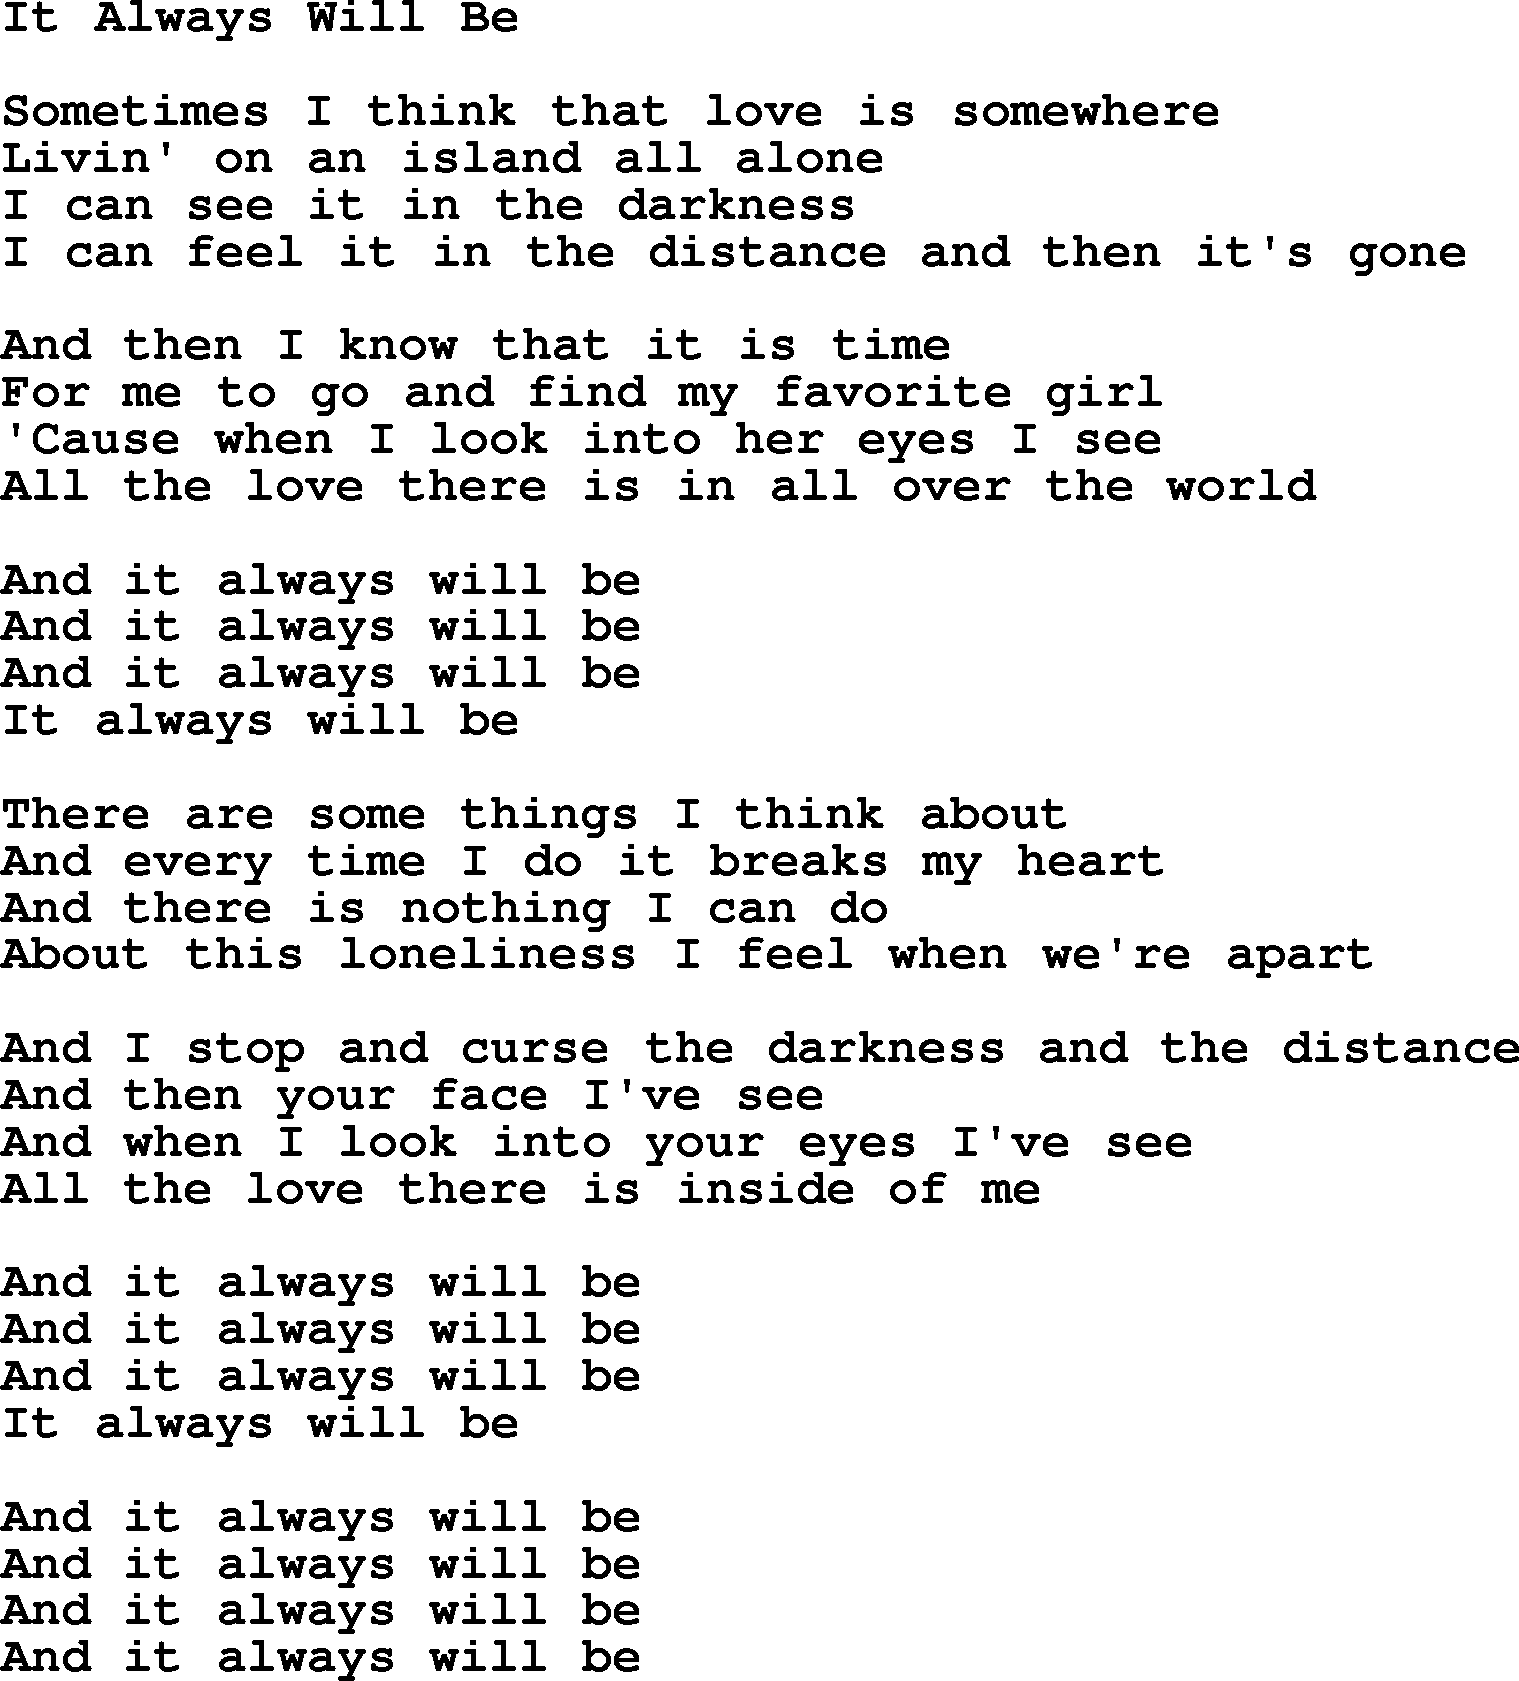 Willie Nelson song: It Always Will Be lyrics